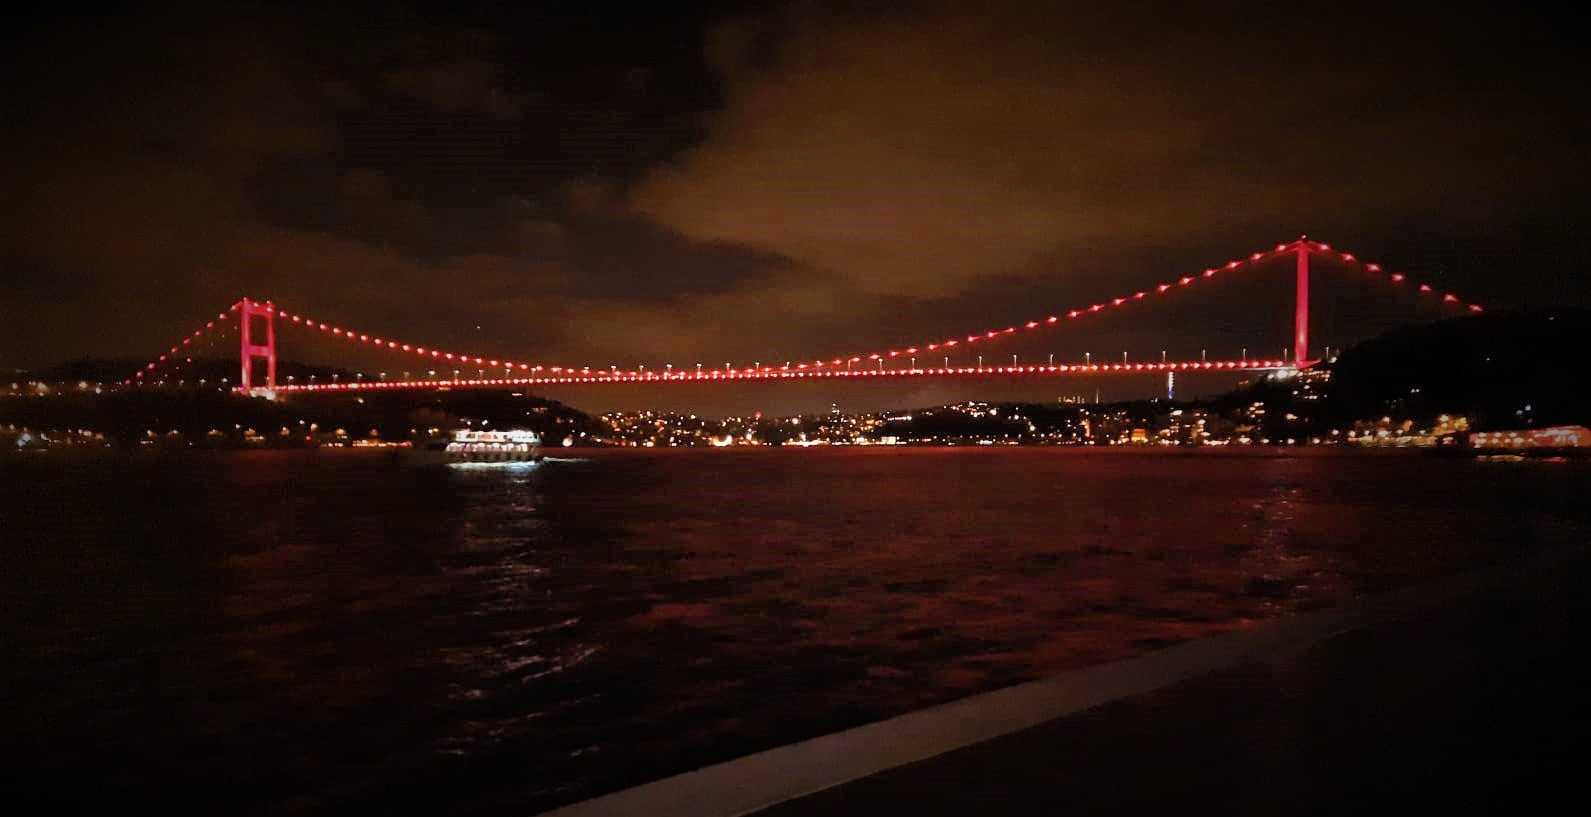 Fatih Sultan Mehmet Bridge (Fatih Sultan Mehmet Köprüsü), İSTANBUL, Turkey